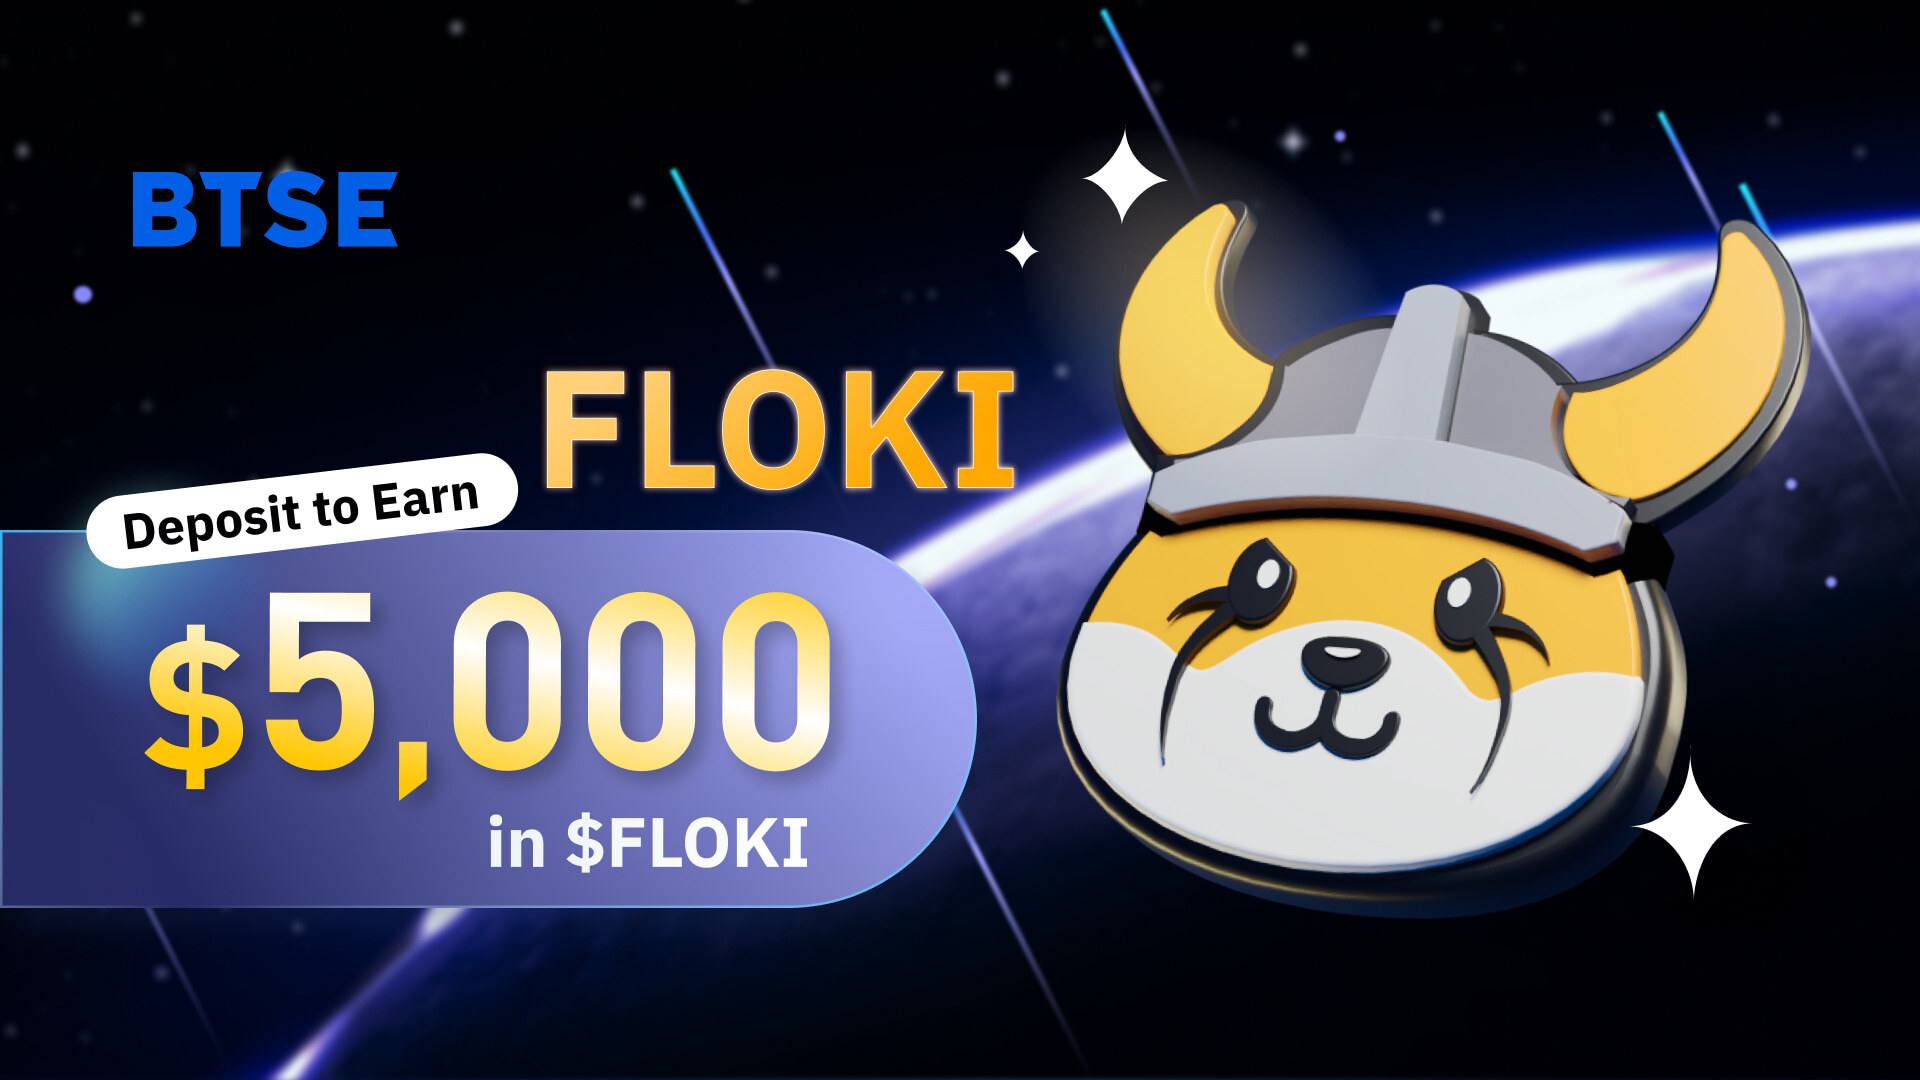 FLOKI AIRDROP EVENT! Deposit to Earn $5,000 in FLOKI!